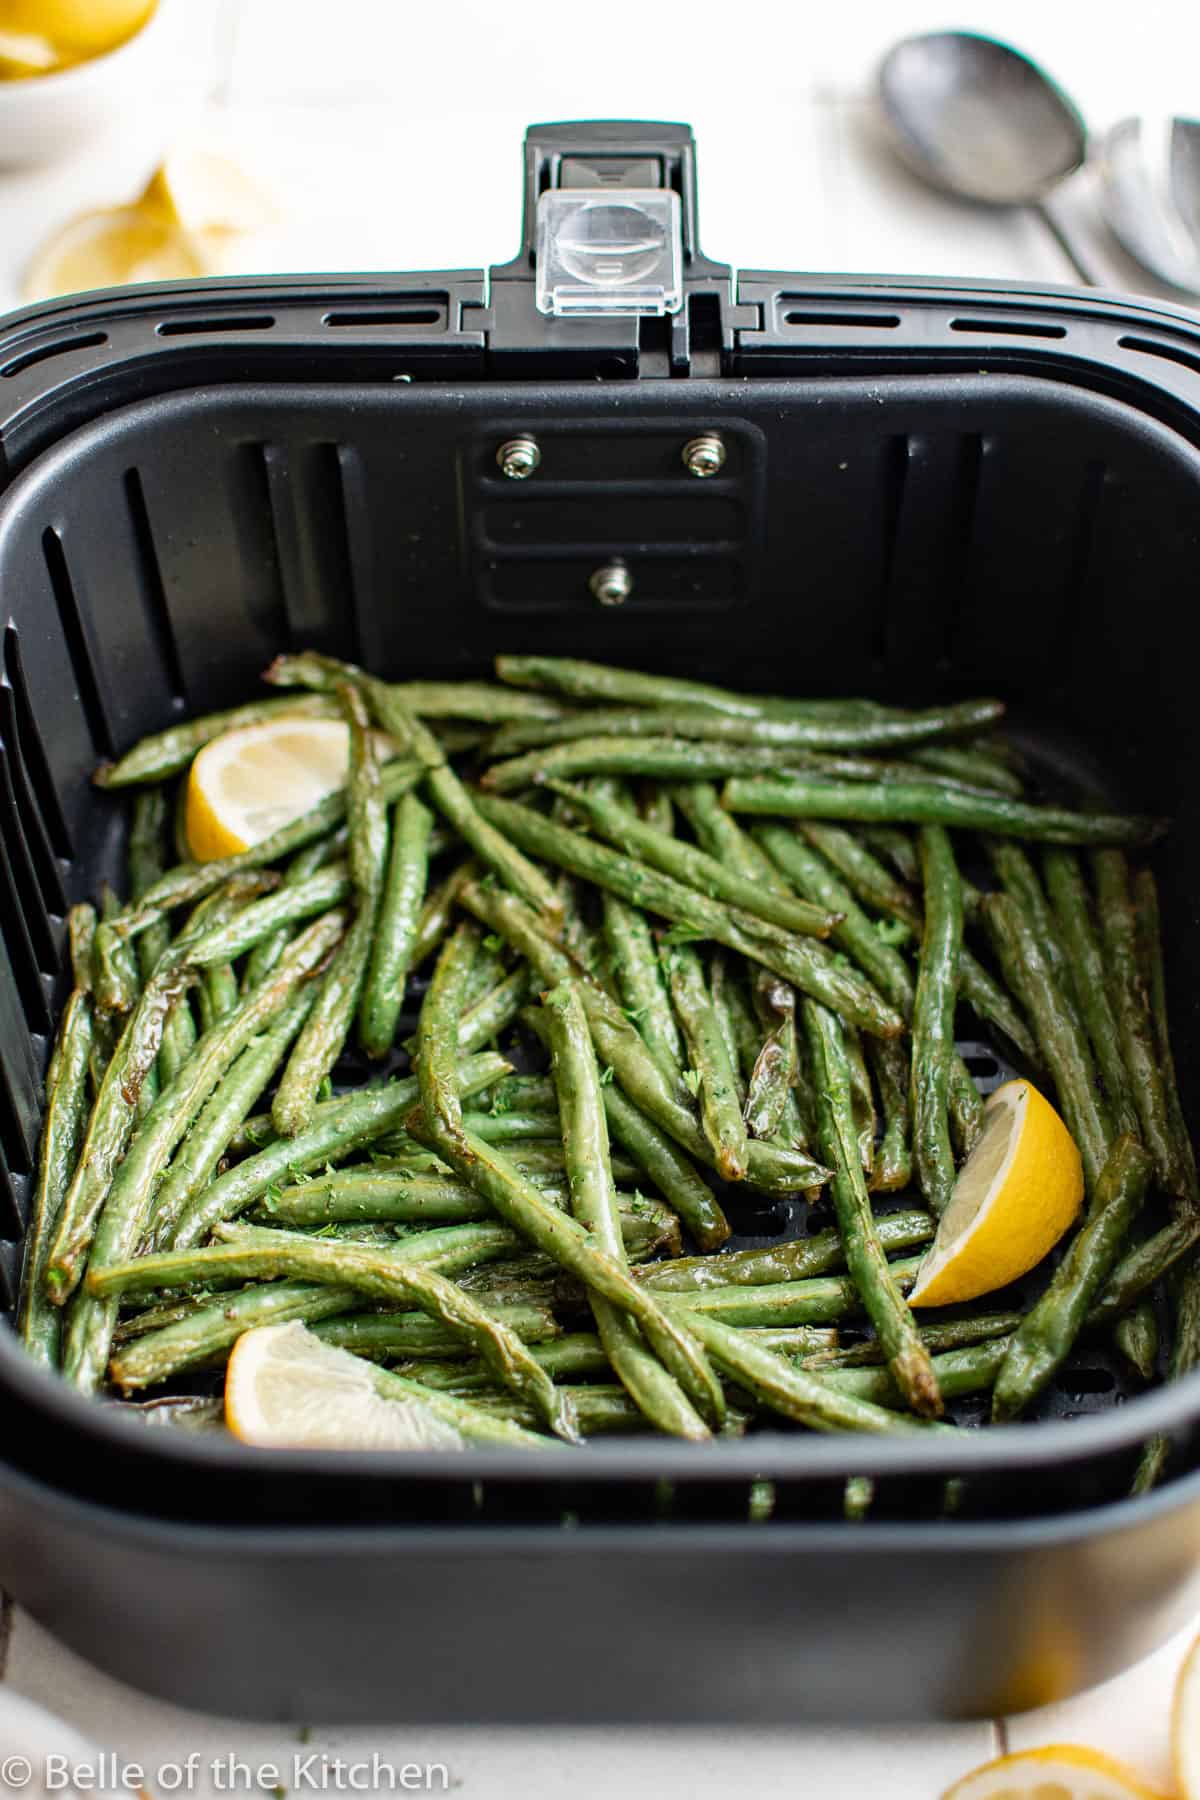 an air fryer basket full of green beans with lemon slices.